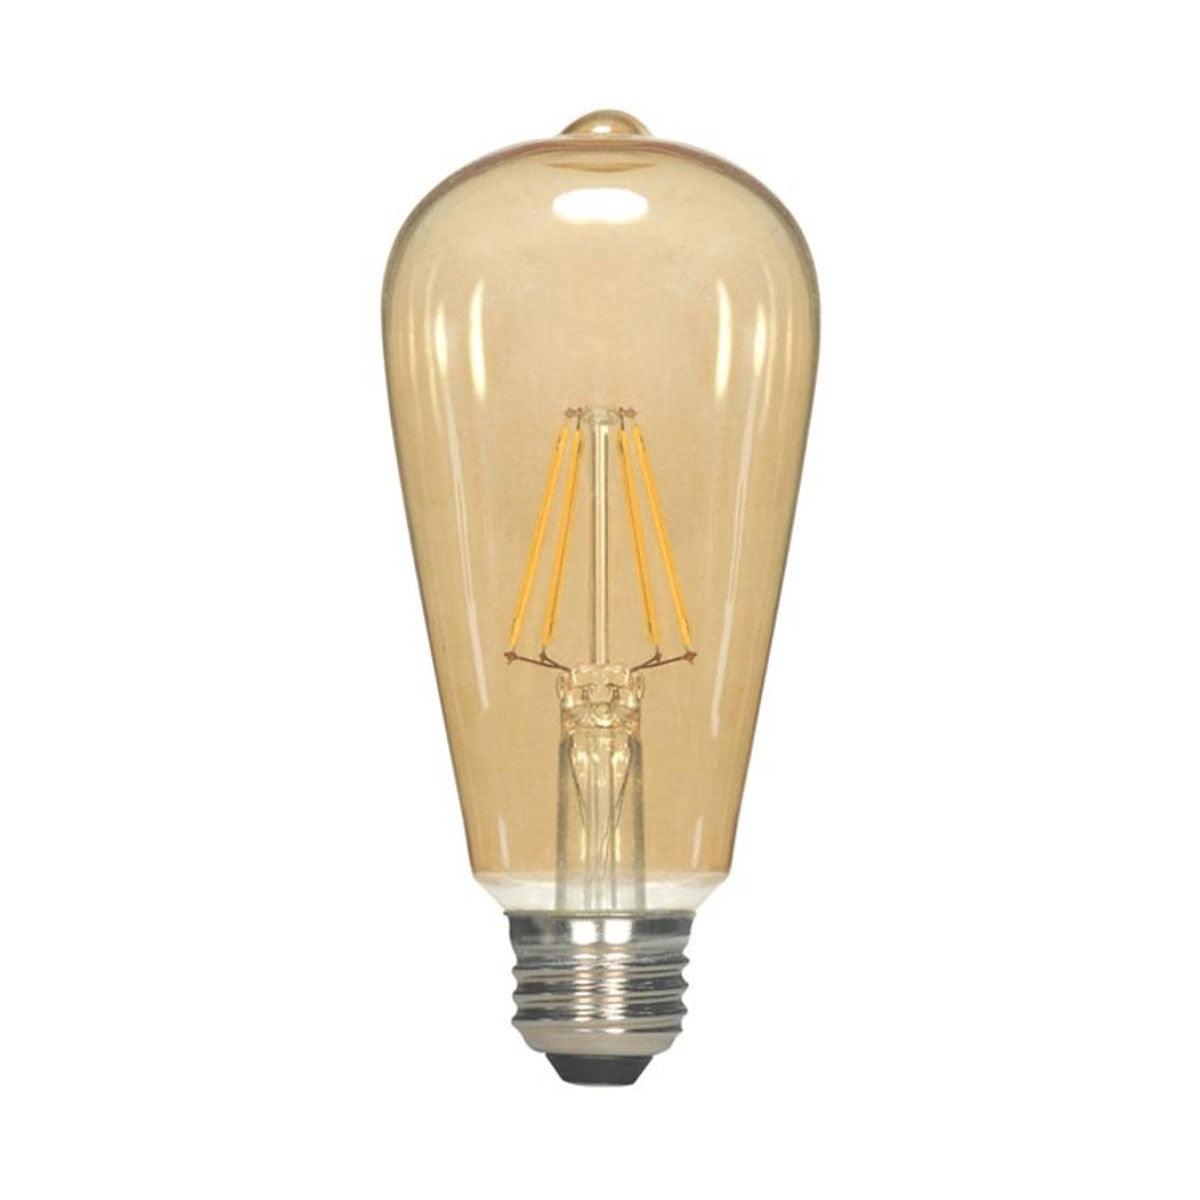 LED ST19 Straight Tapered Bulb, 7 Watt, 650 Lumens, 2000K, E26 Medium Base, Amber Finish